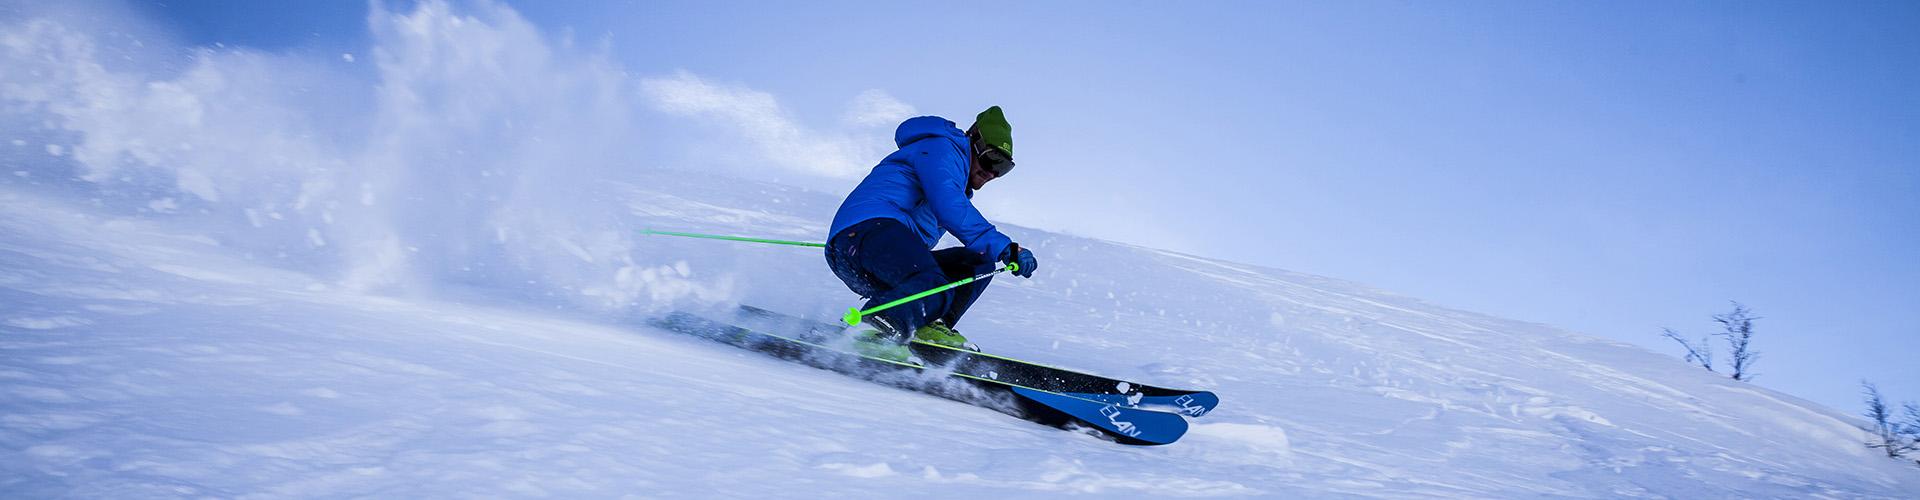 Download snowtrax_mockup_skiing_1 - Snowtrax Skiing & Snowboarding Activity Centre UK